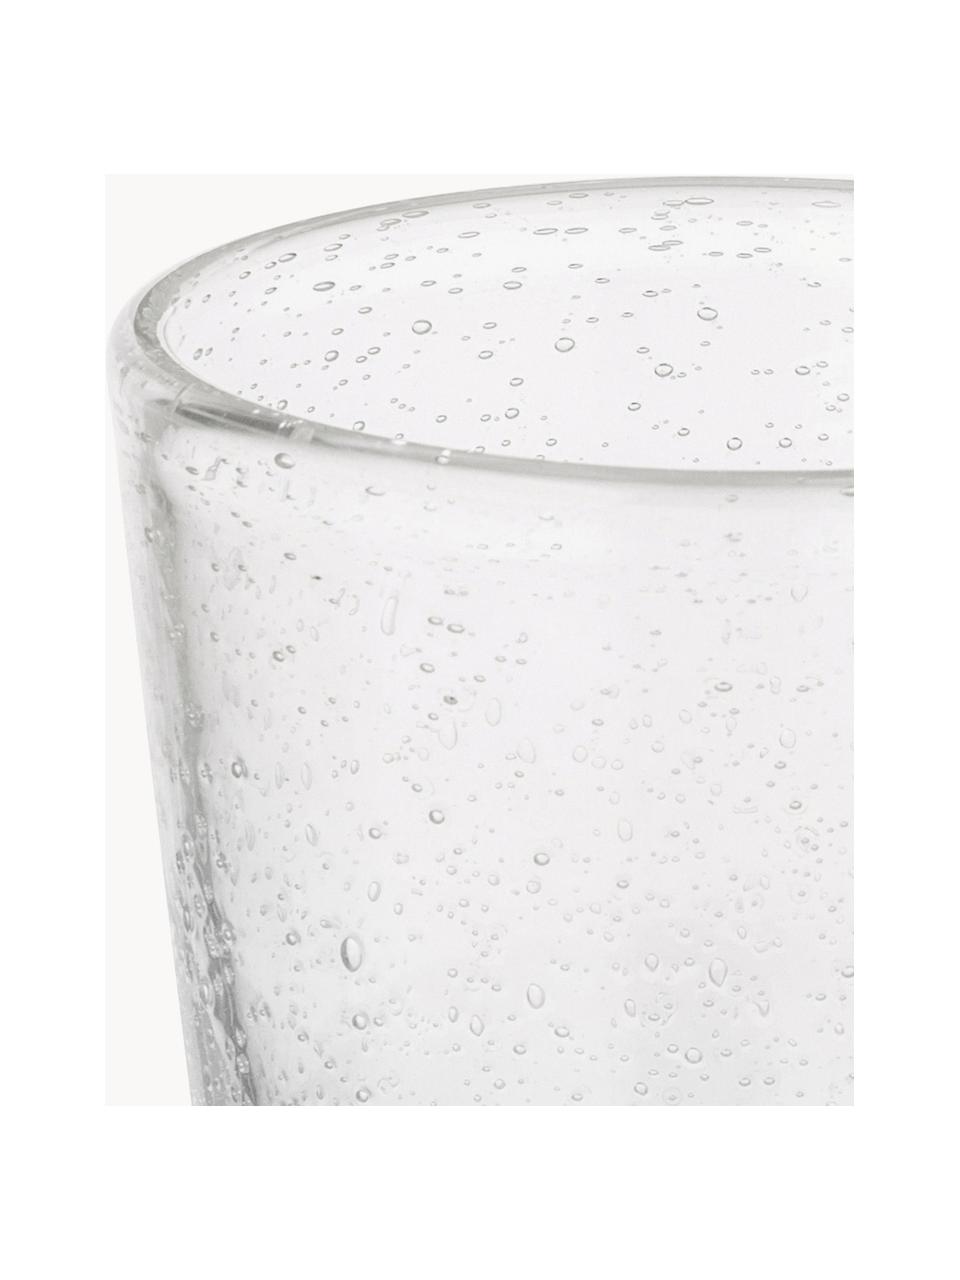 Szklanka ze szkła dmuchanego Bubble, 4 szt., Szkło dmuchane, Transparentny, Ø 8 x W 10 cm, 250 ml